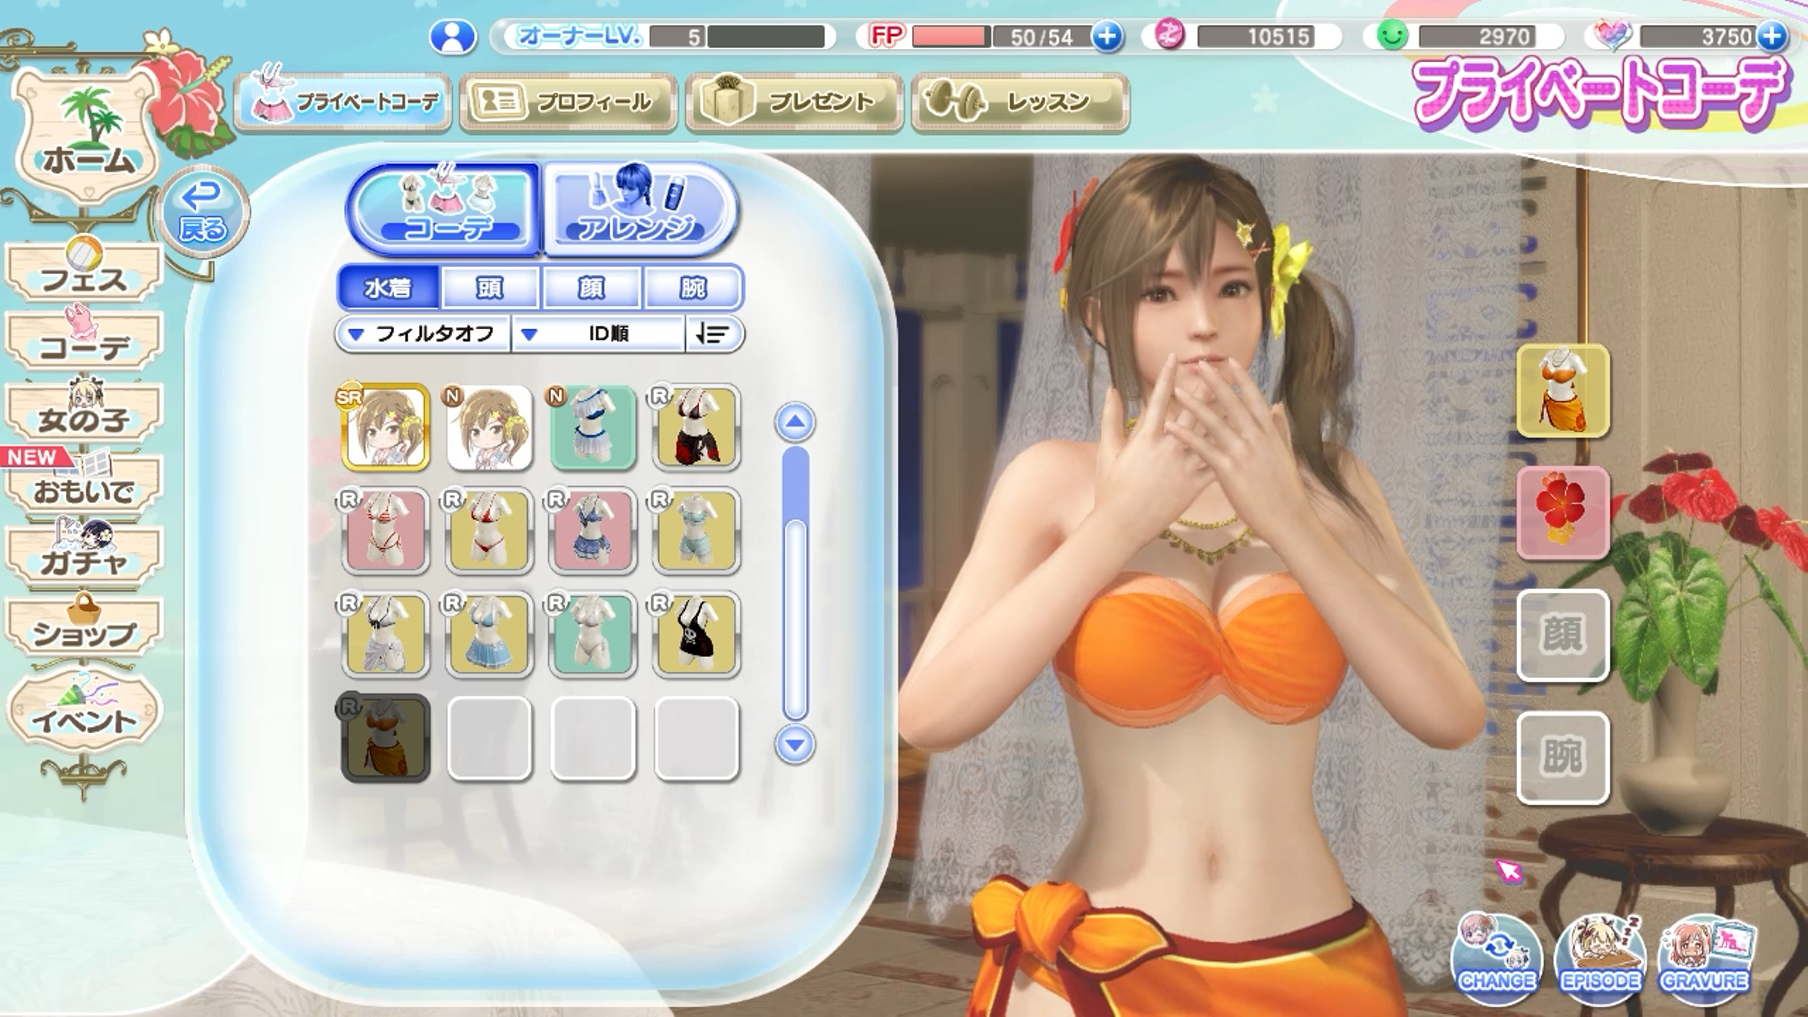 Misaki Wearing Orange Bikini